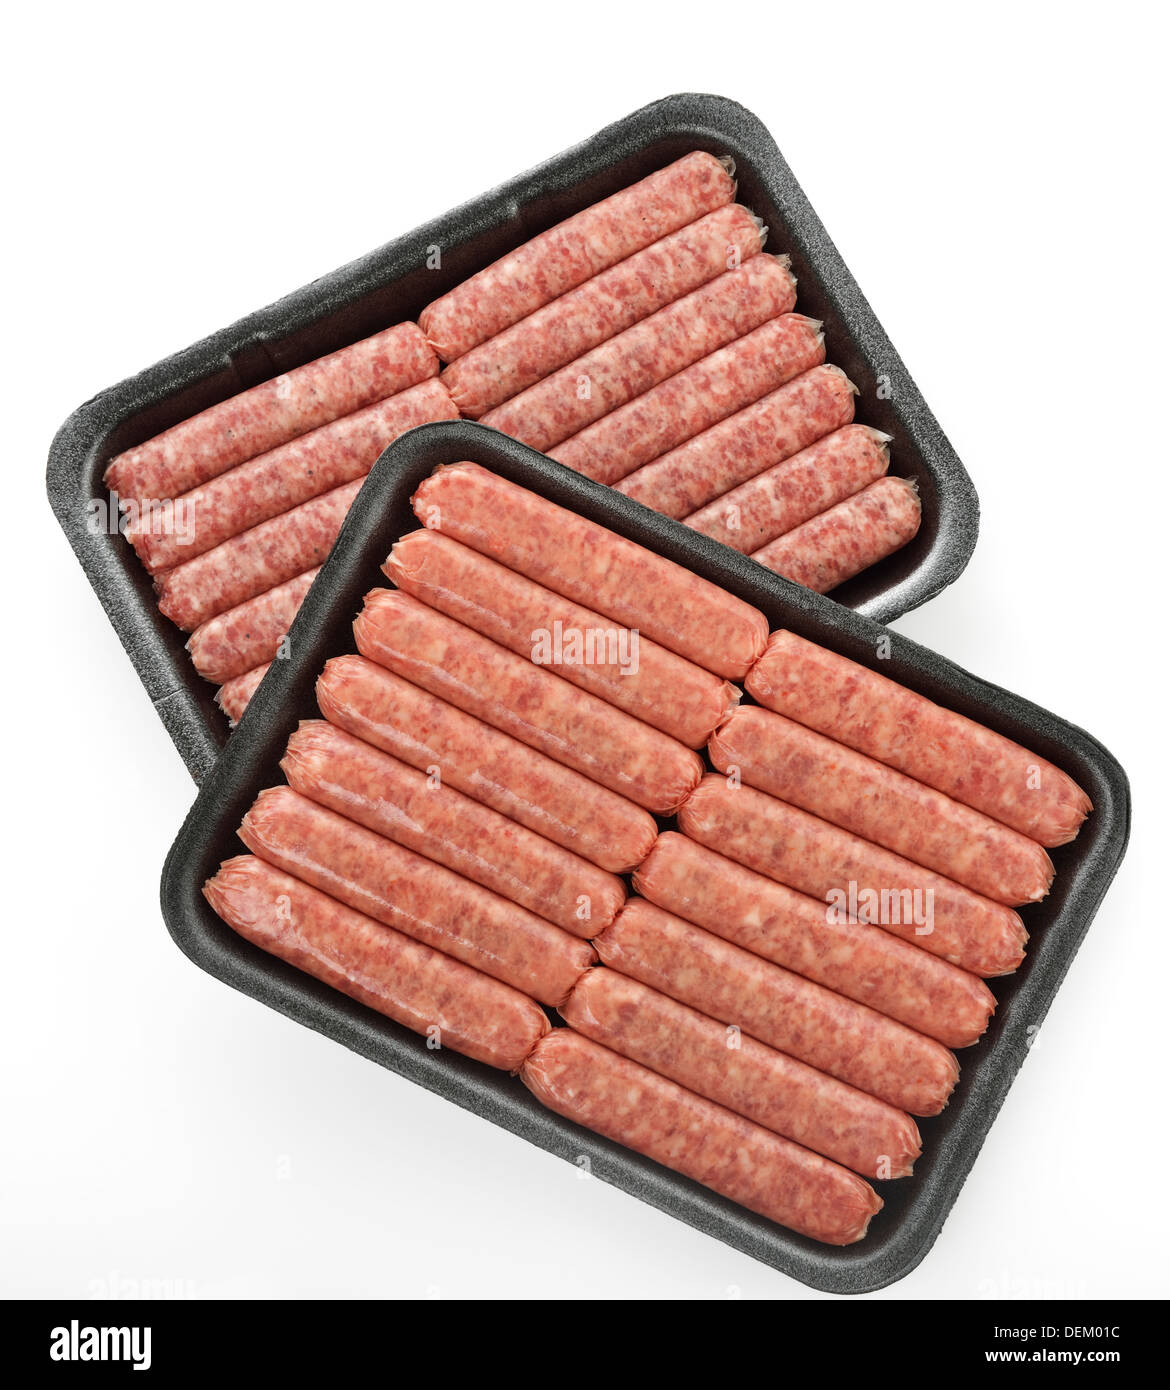 Raw Breakfast Sausage Links Stock Photo